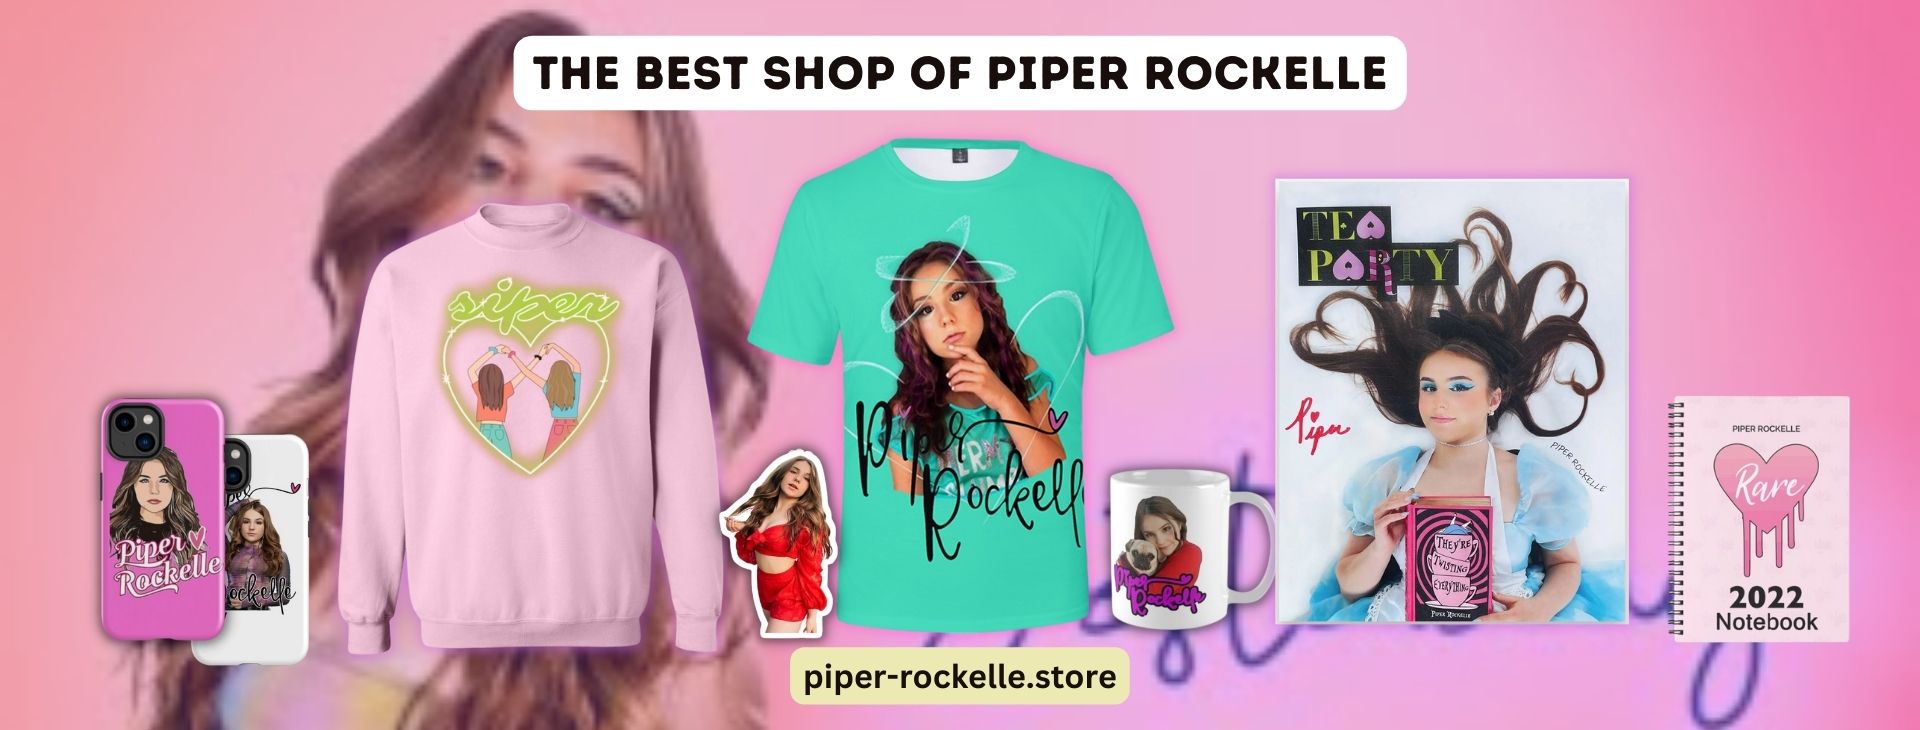 piper rockelle Banner 1920x730px 1 - Piper Rockelle Store